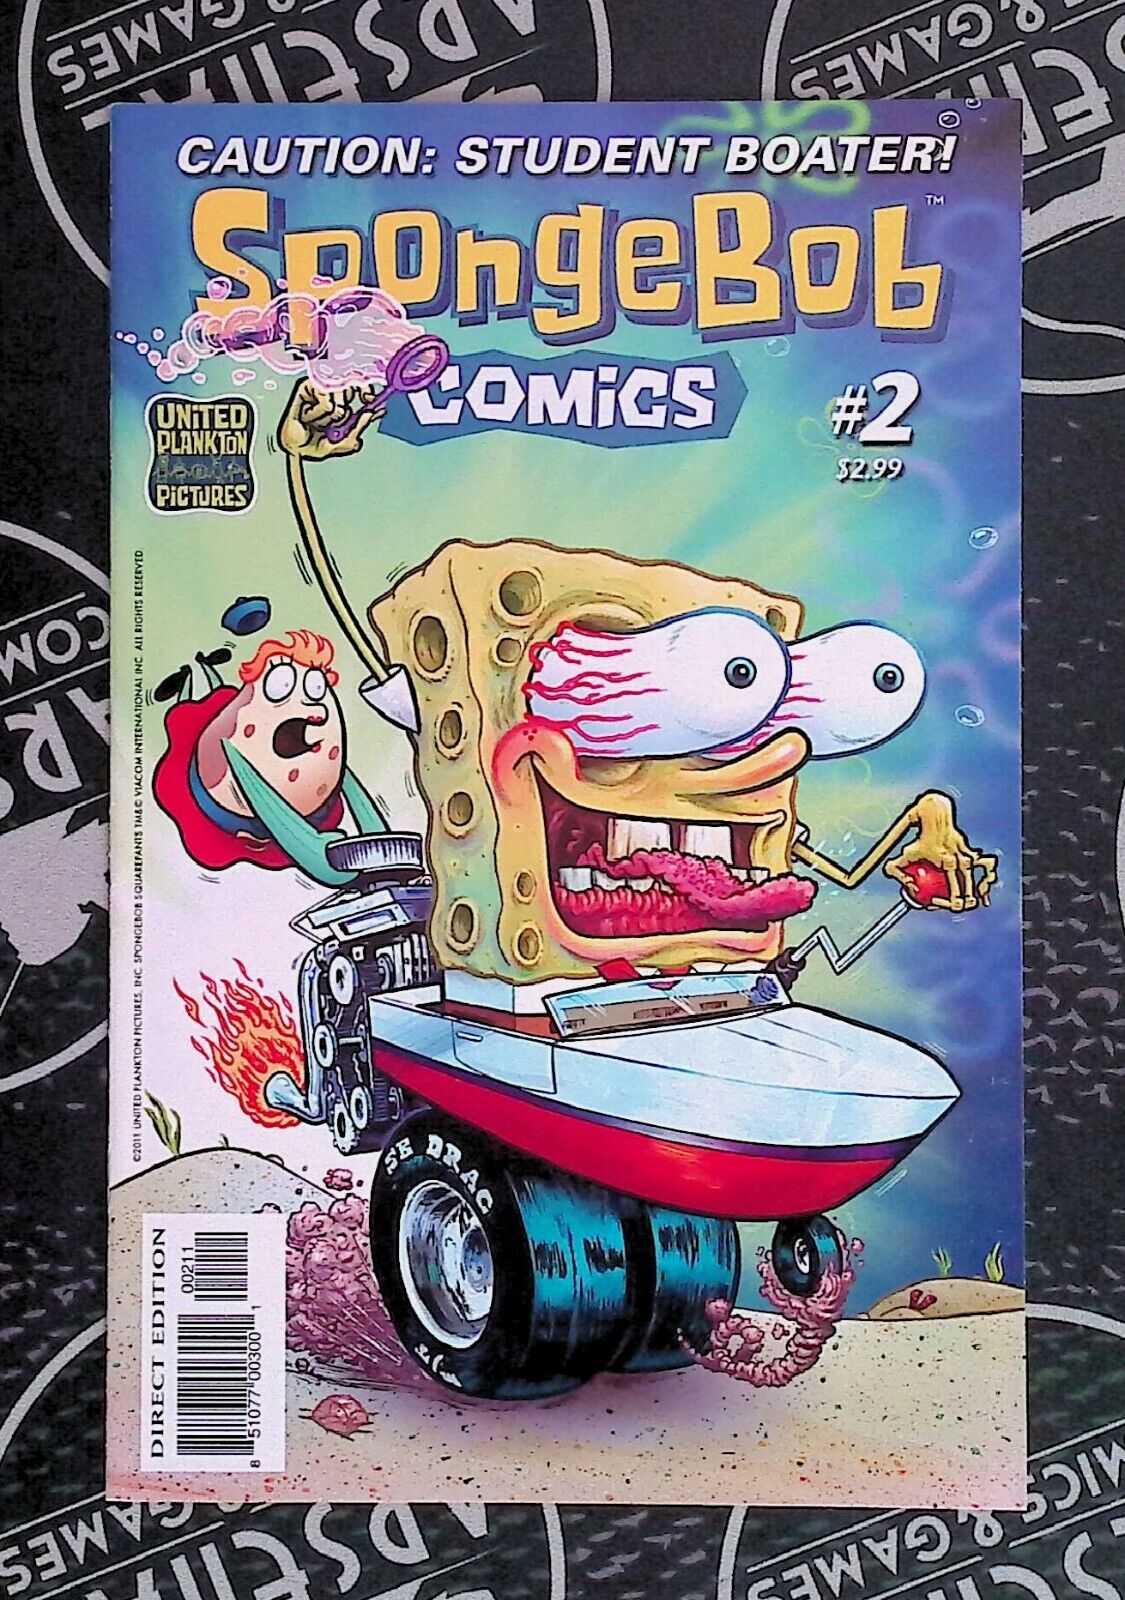 Sponge Bob Comics #2 2011 United Plankton Pictures Ed Big Daddy Roth Homage 